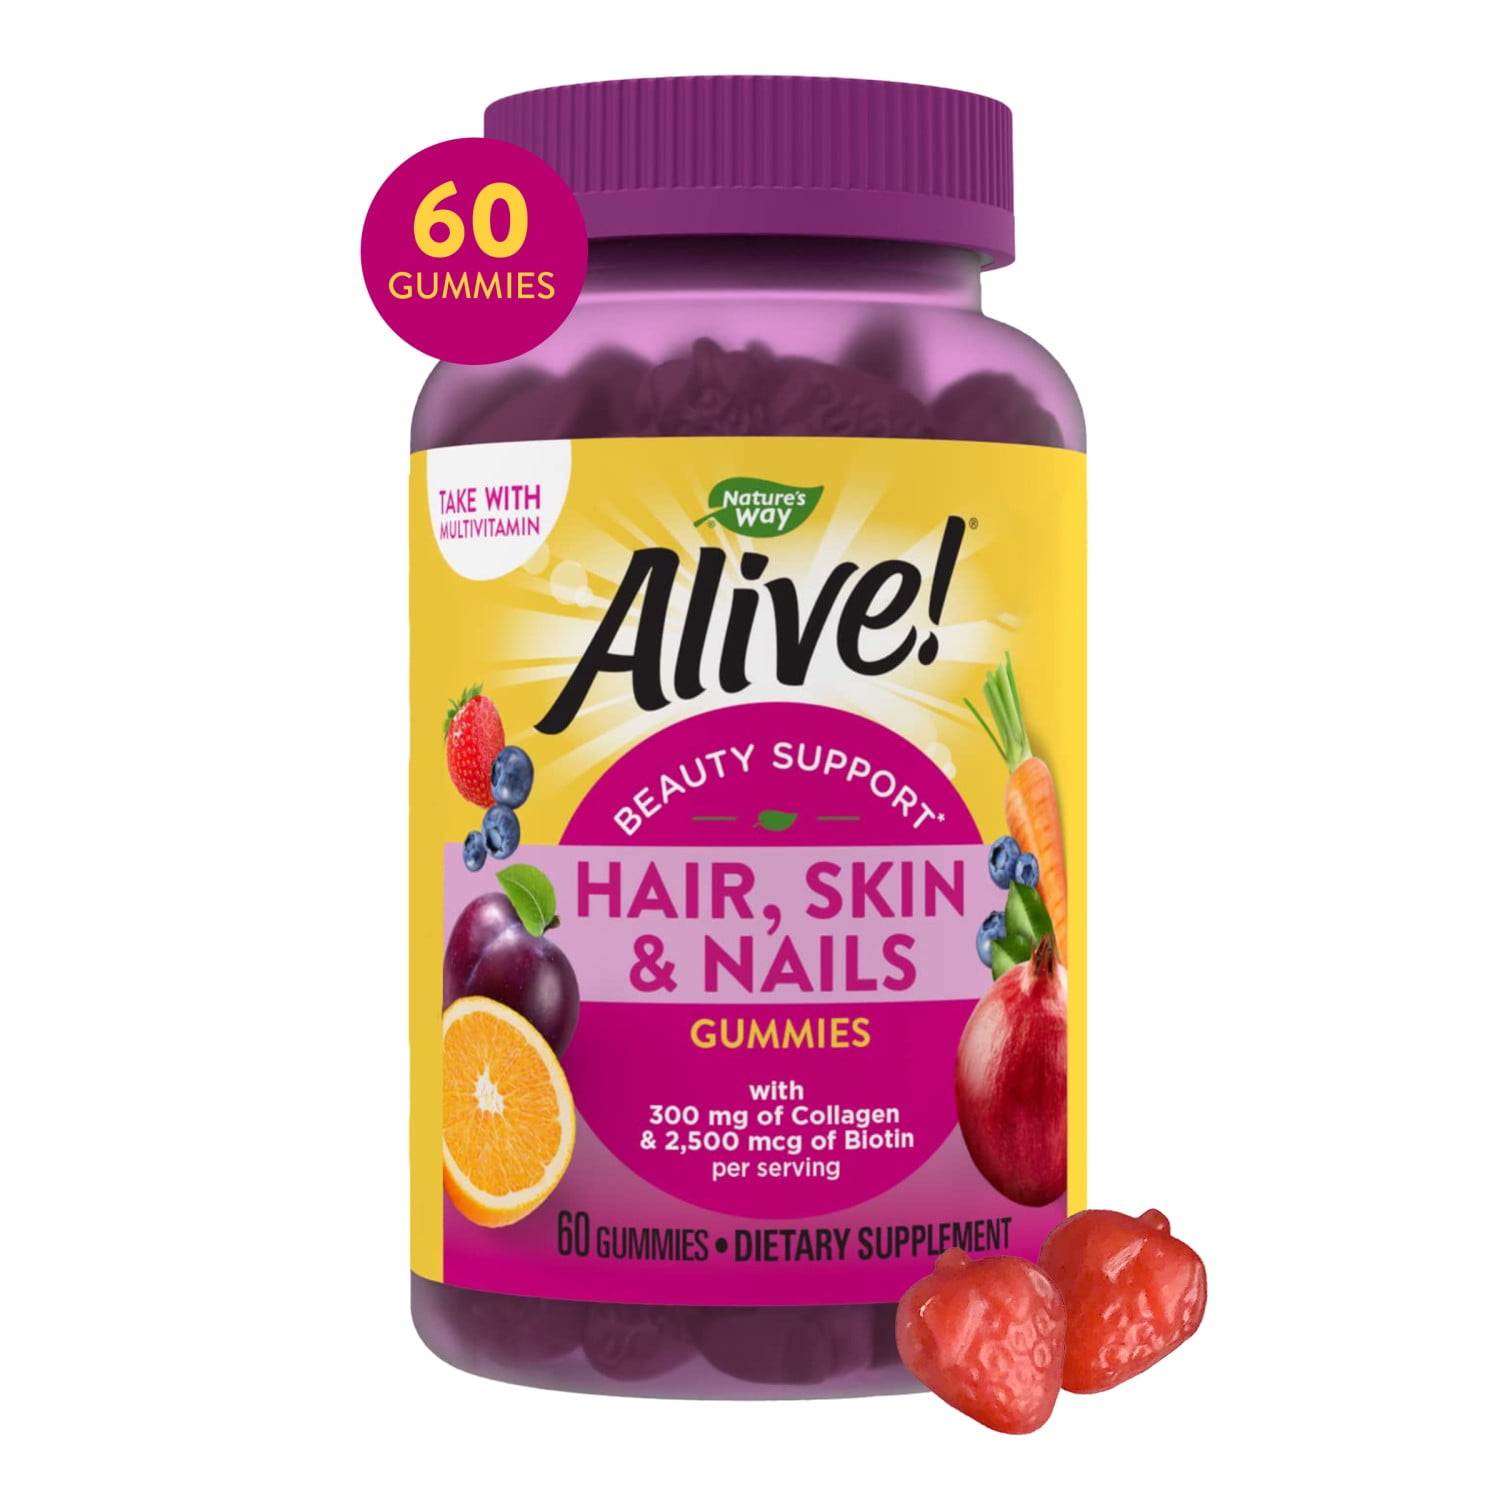 Nature's Way Alive! Hair, Skin & Nails Gummies, Collagen & Biotin,  Antioxidant Vitamins C & E, Strawberry Flavored, 60 Gummies 